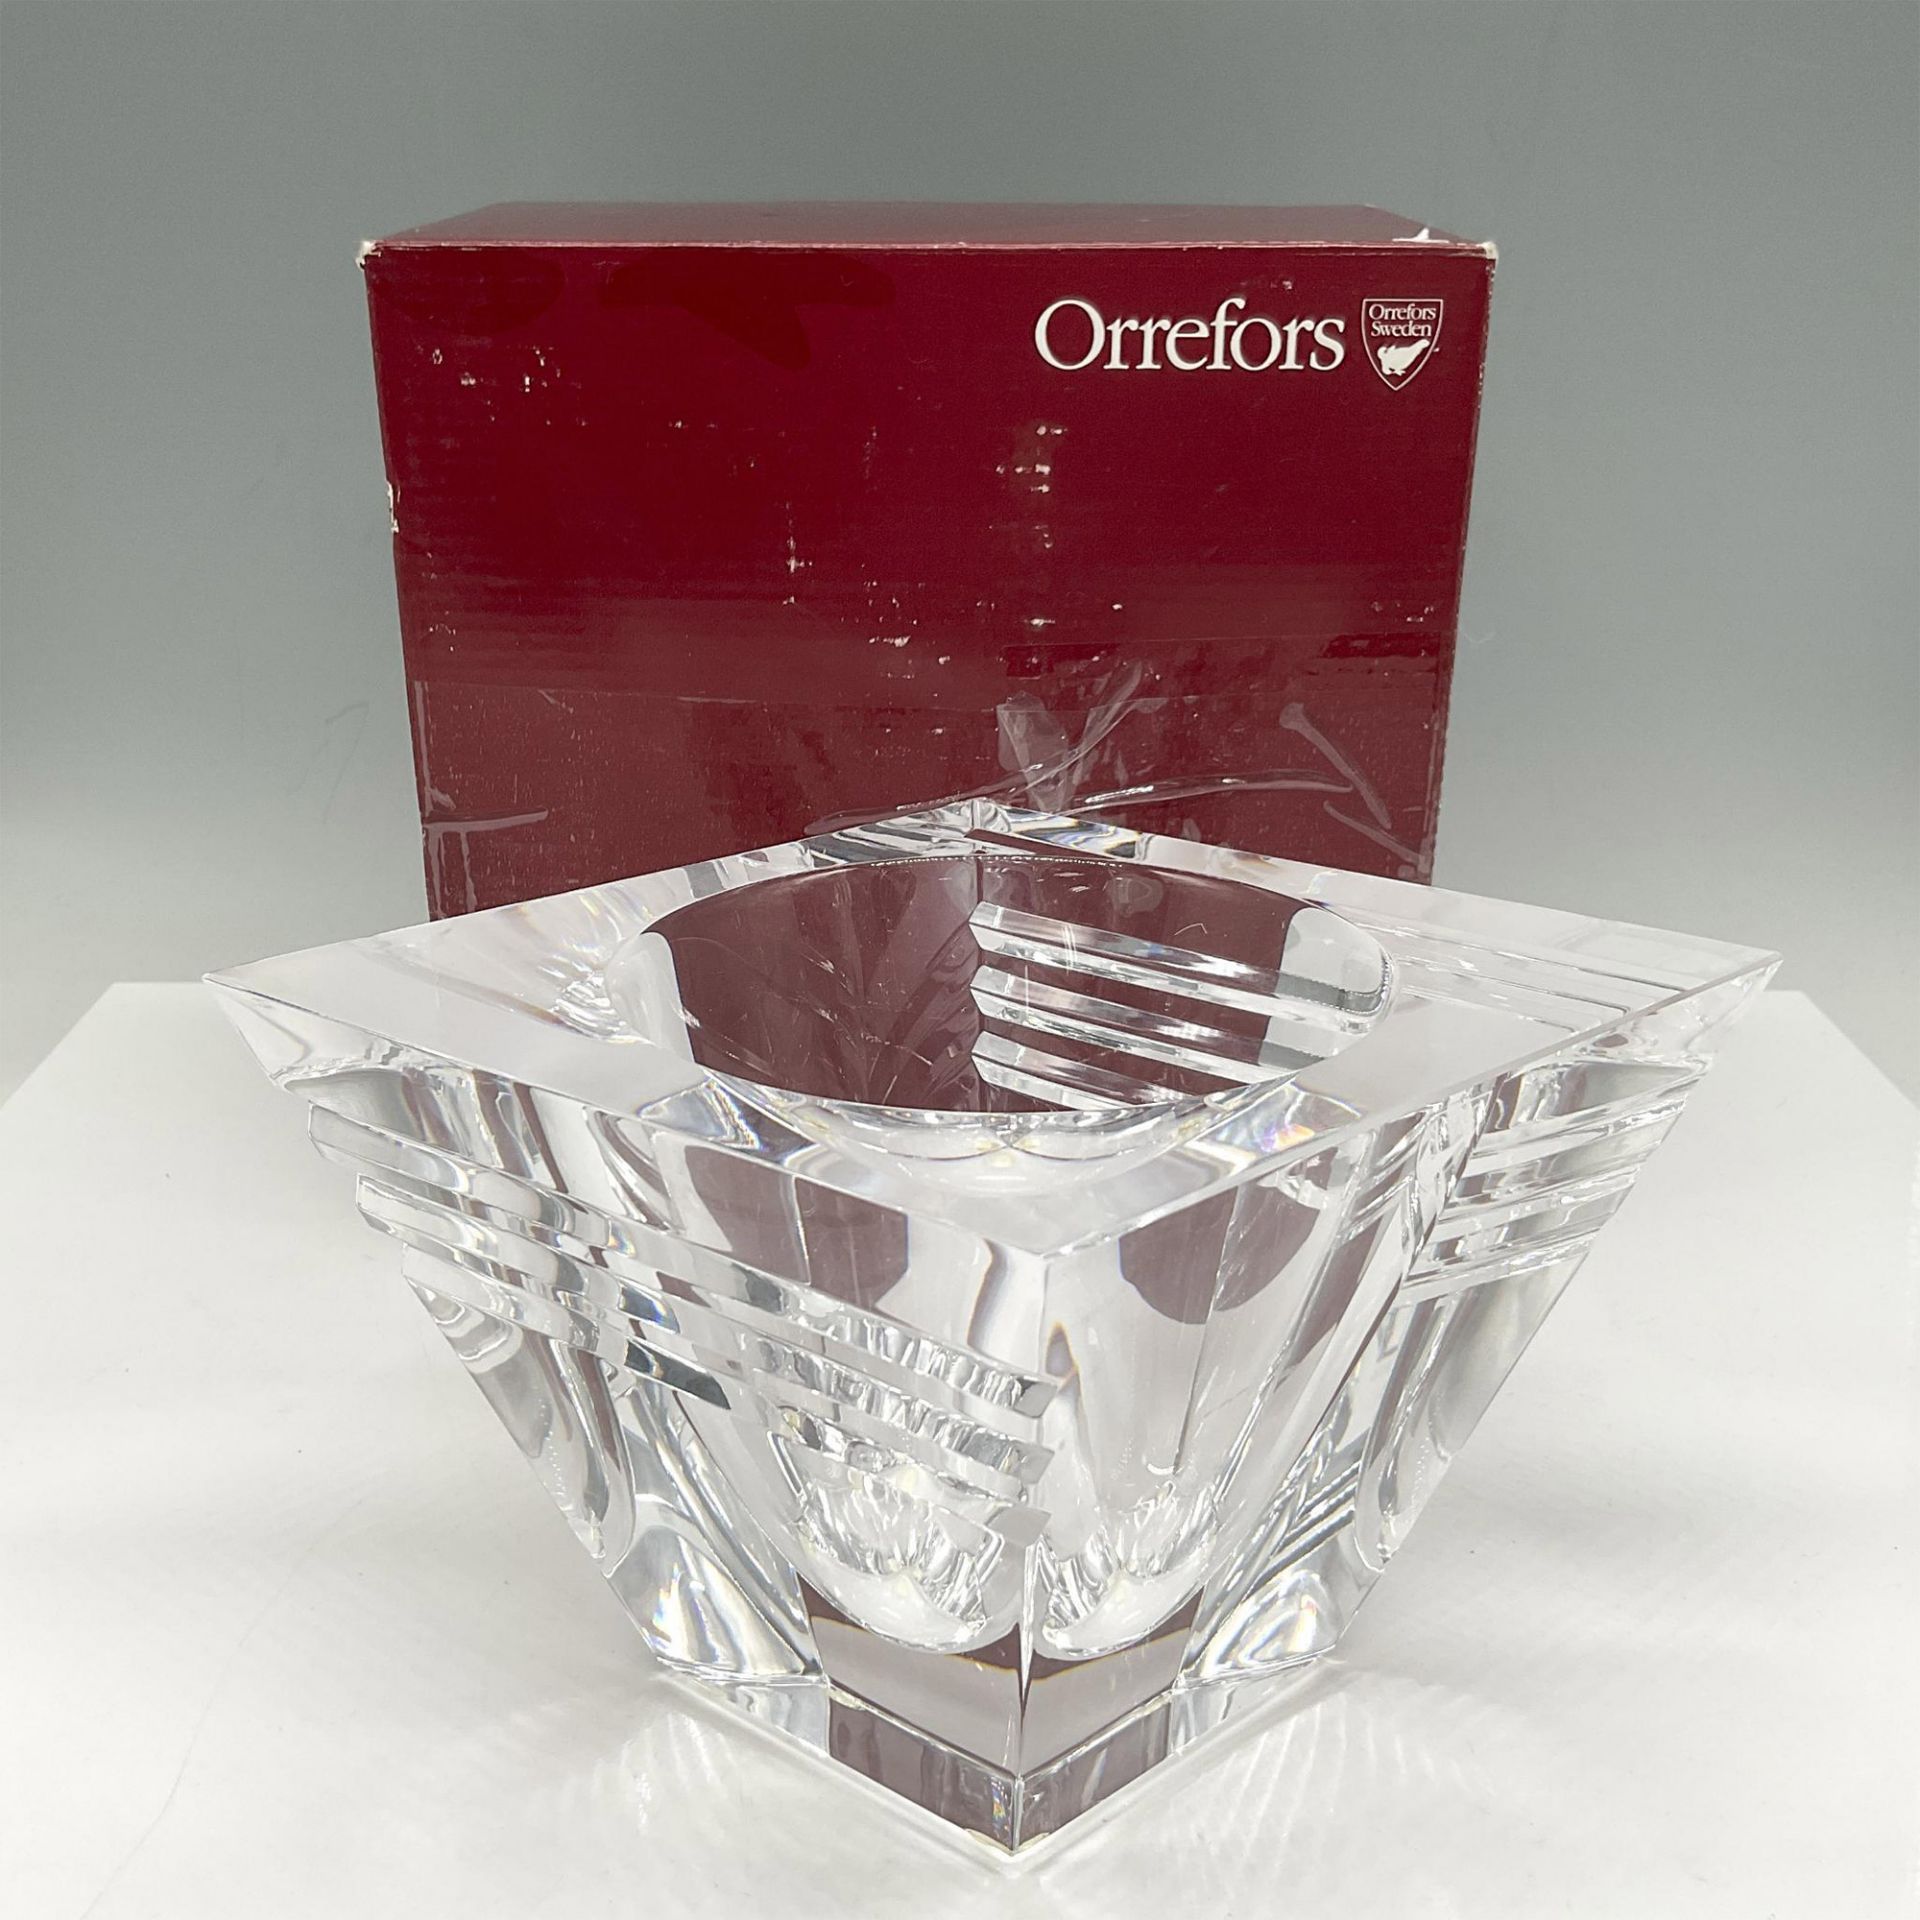 Orrefors Crystal Centerpiece Bowl, Horizon - Image 4 of 4